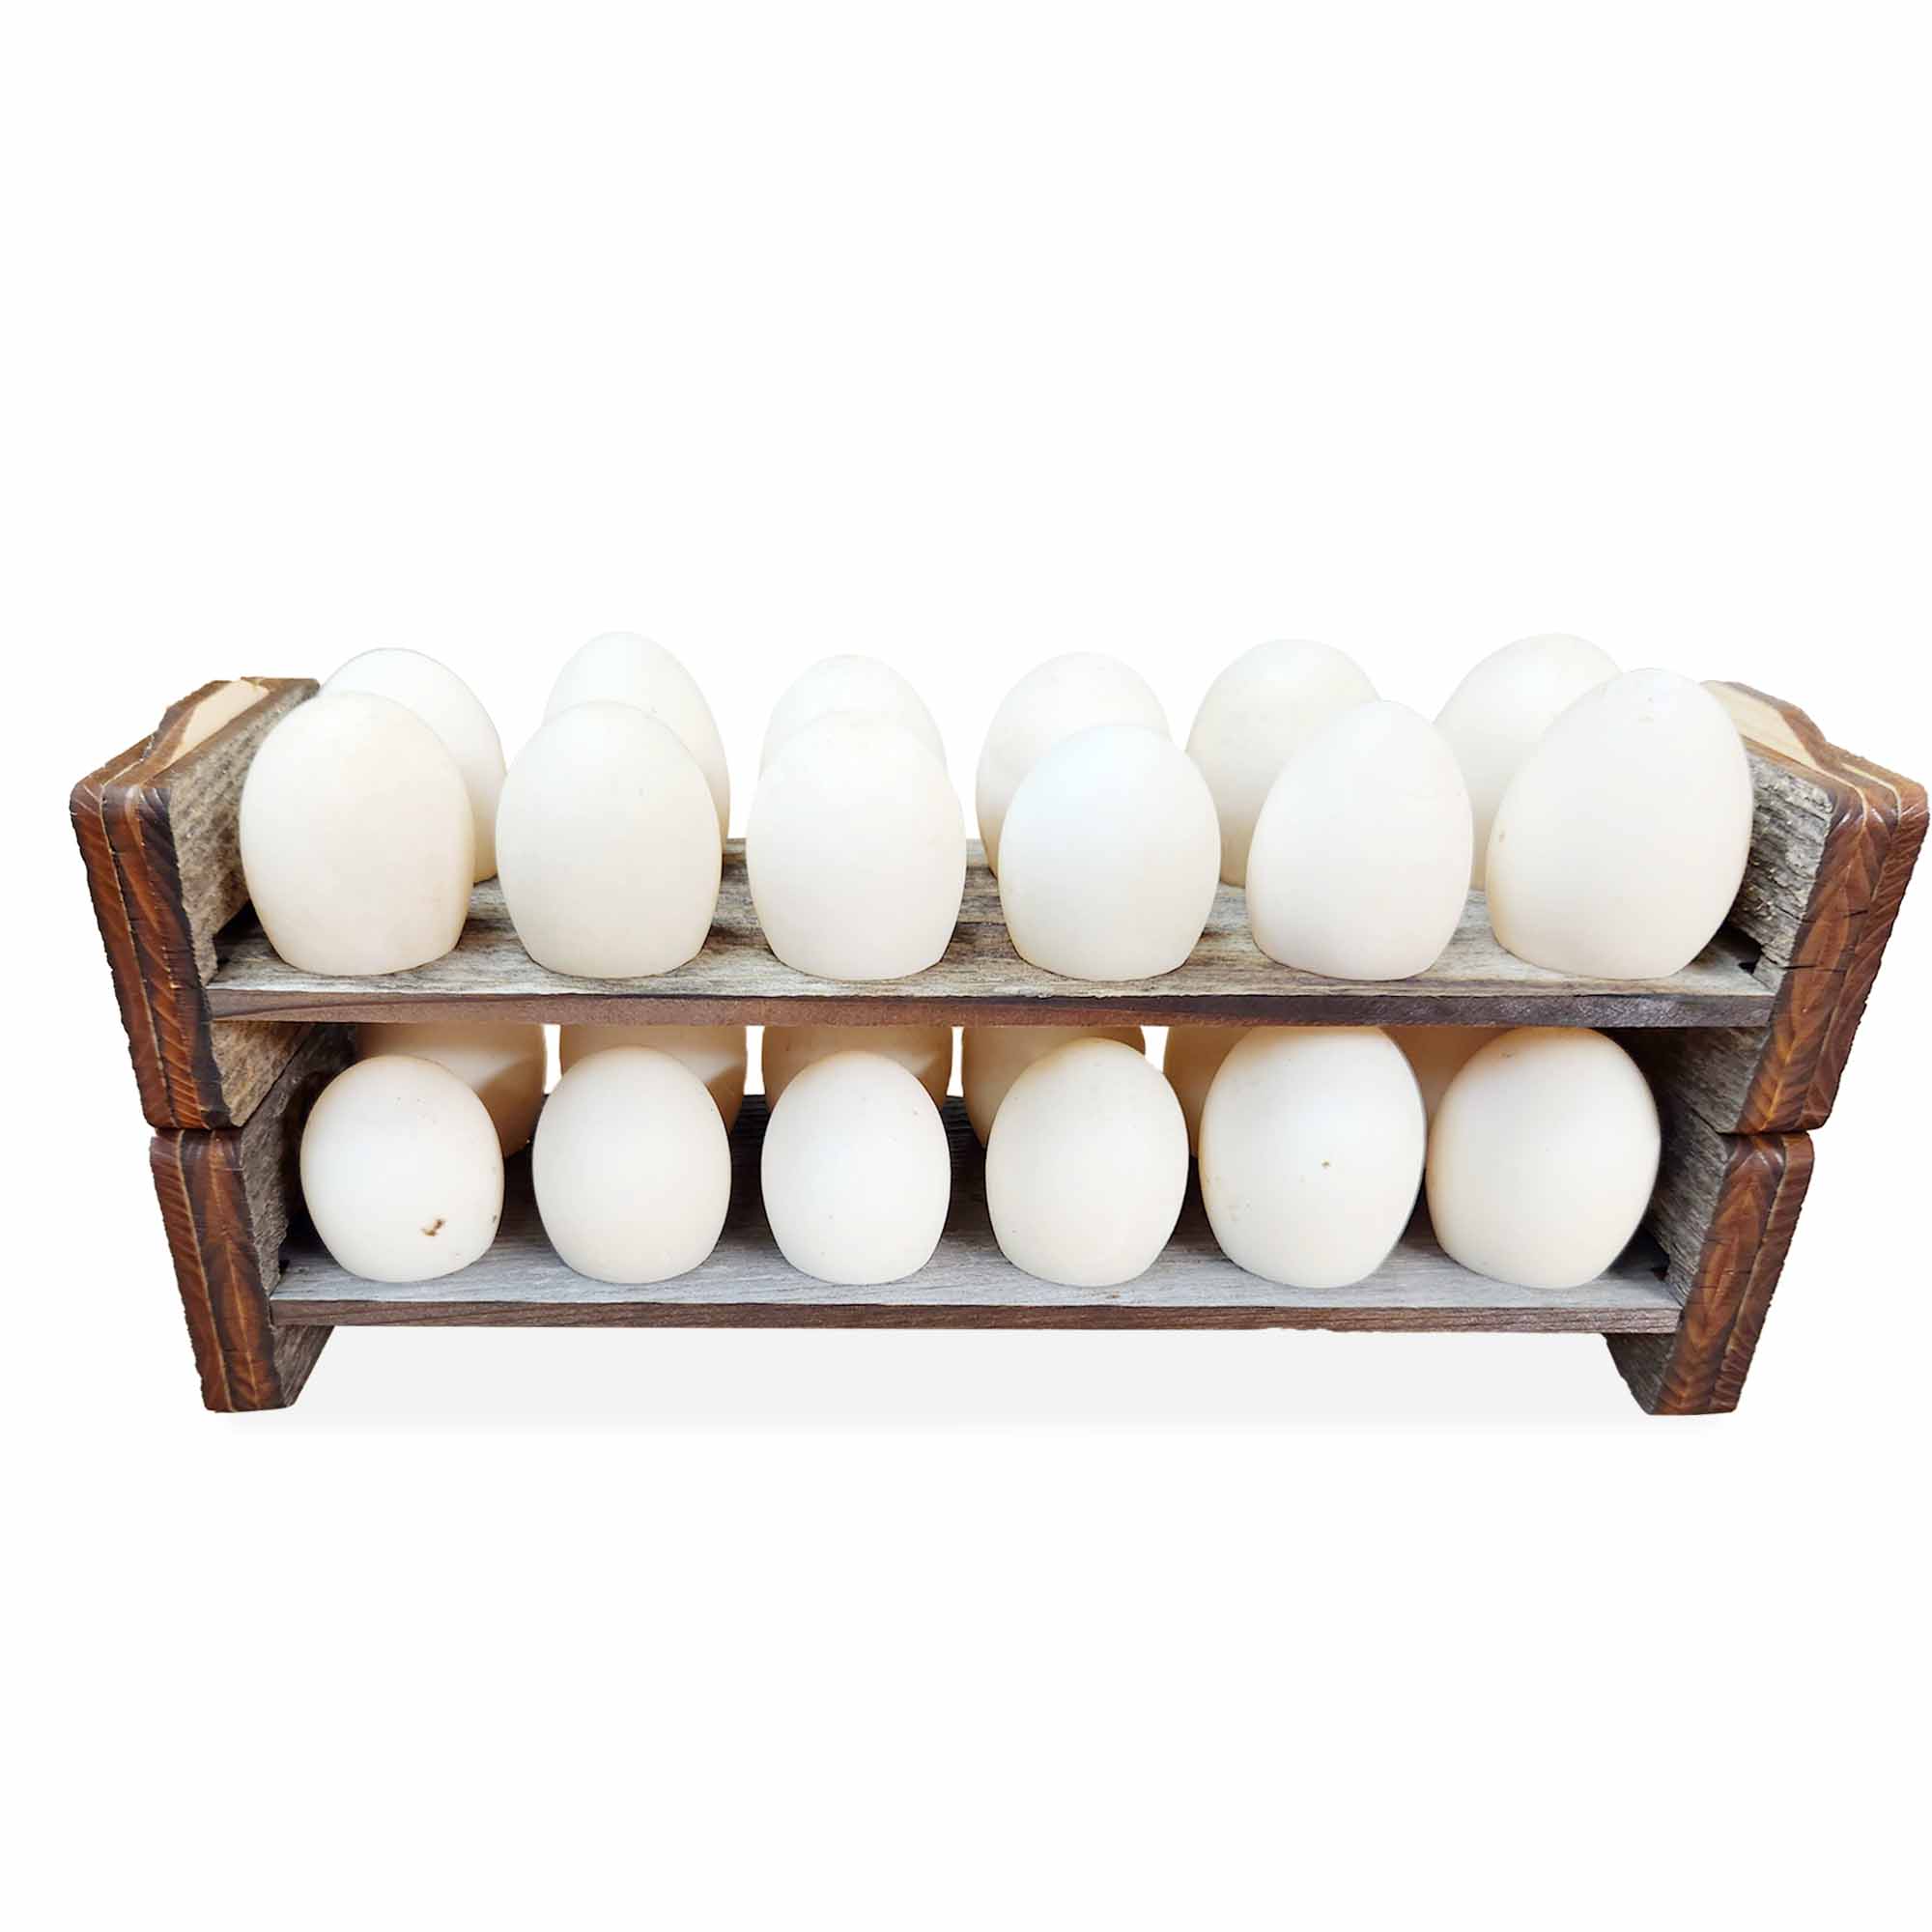 Egg Holder Tray- Countertop Stackable Egg Rack For Fresh Eggs - Rockin' Wood